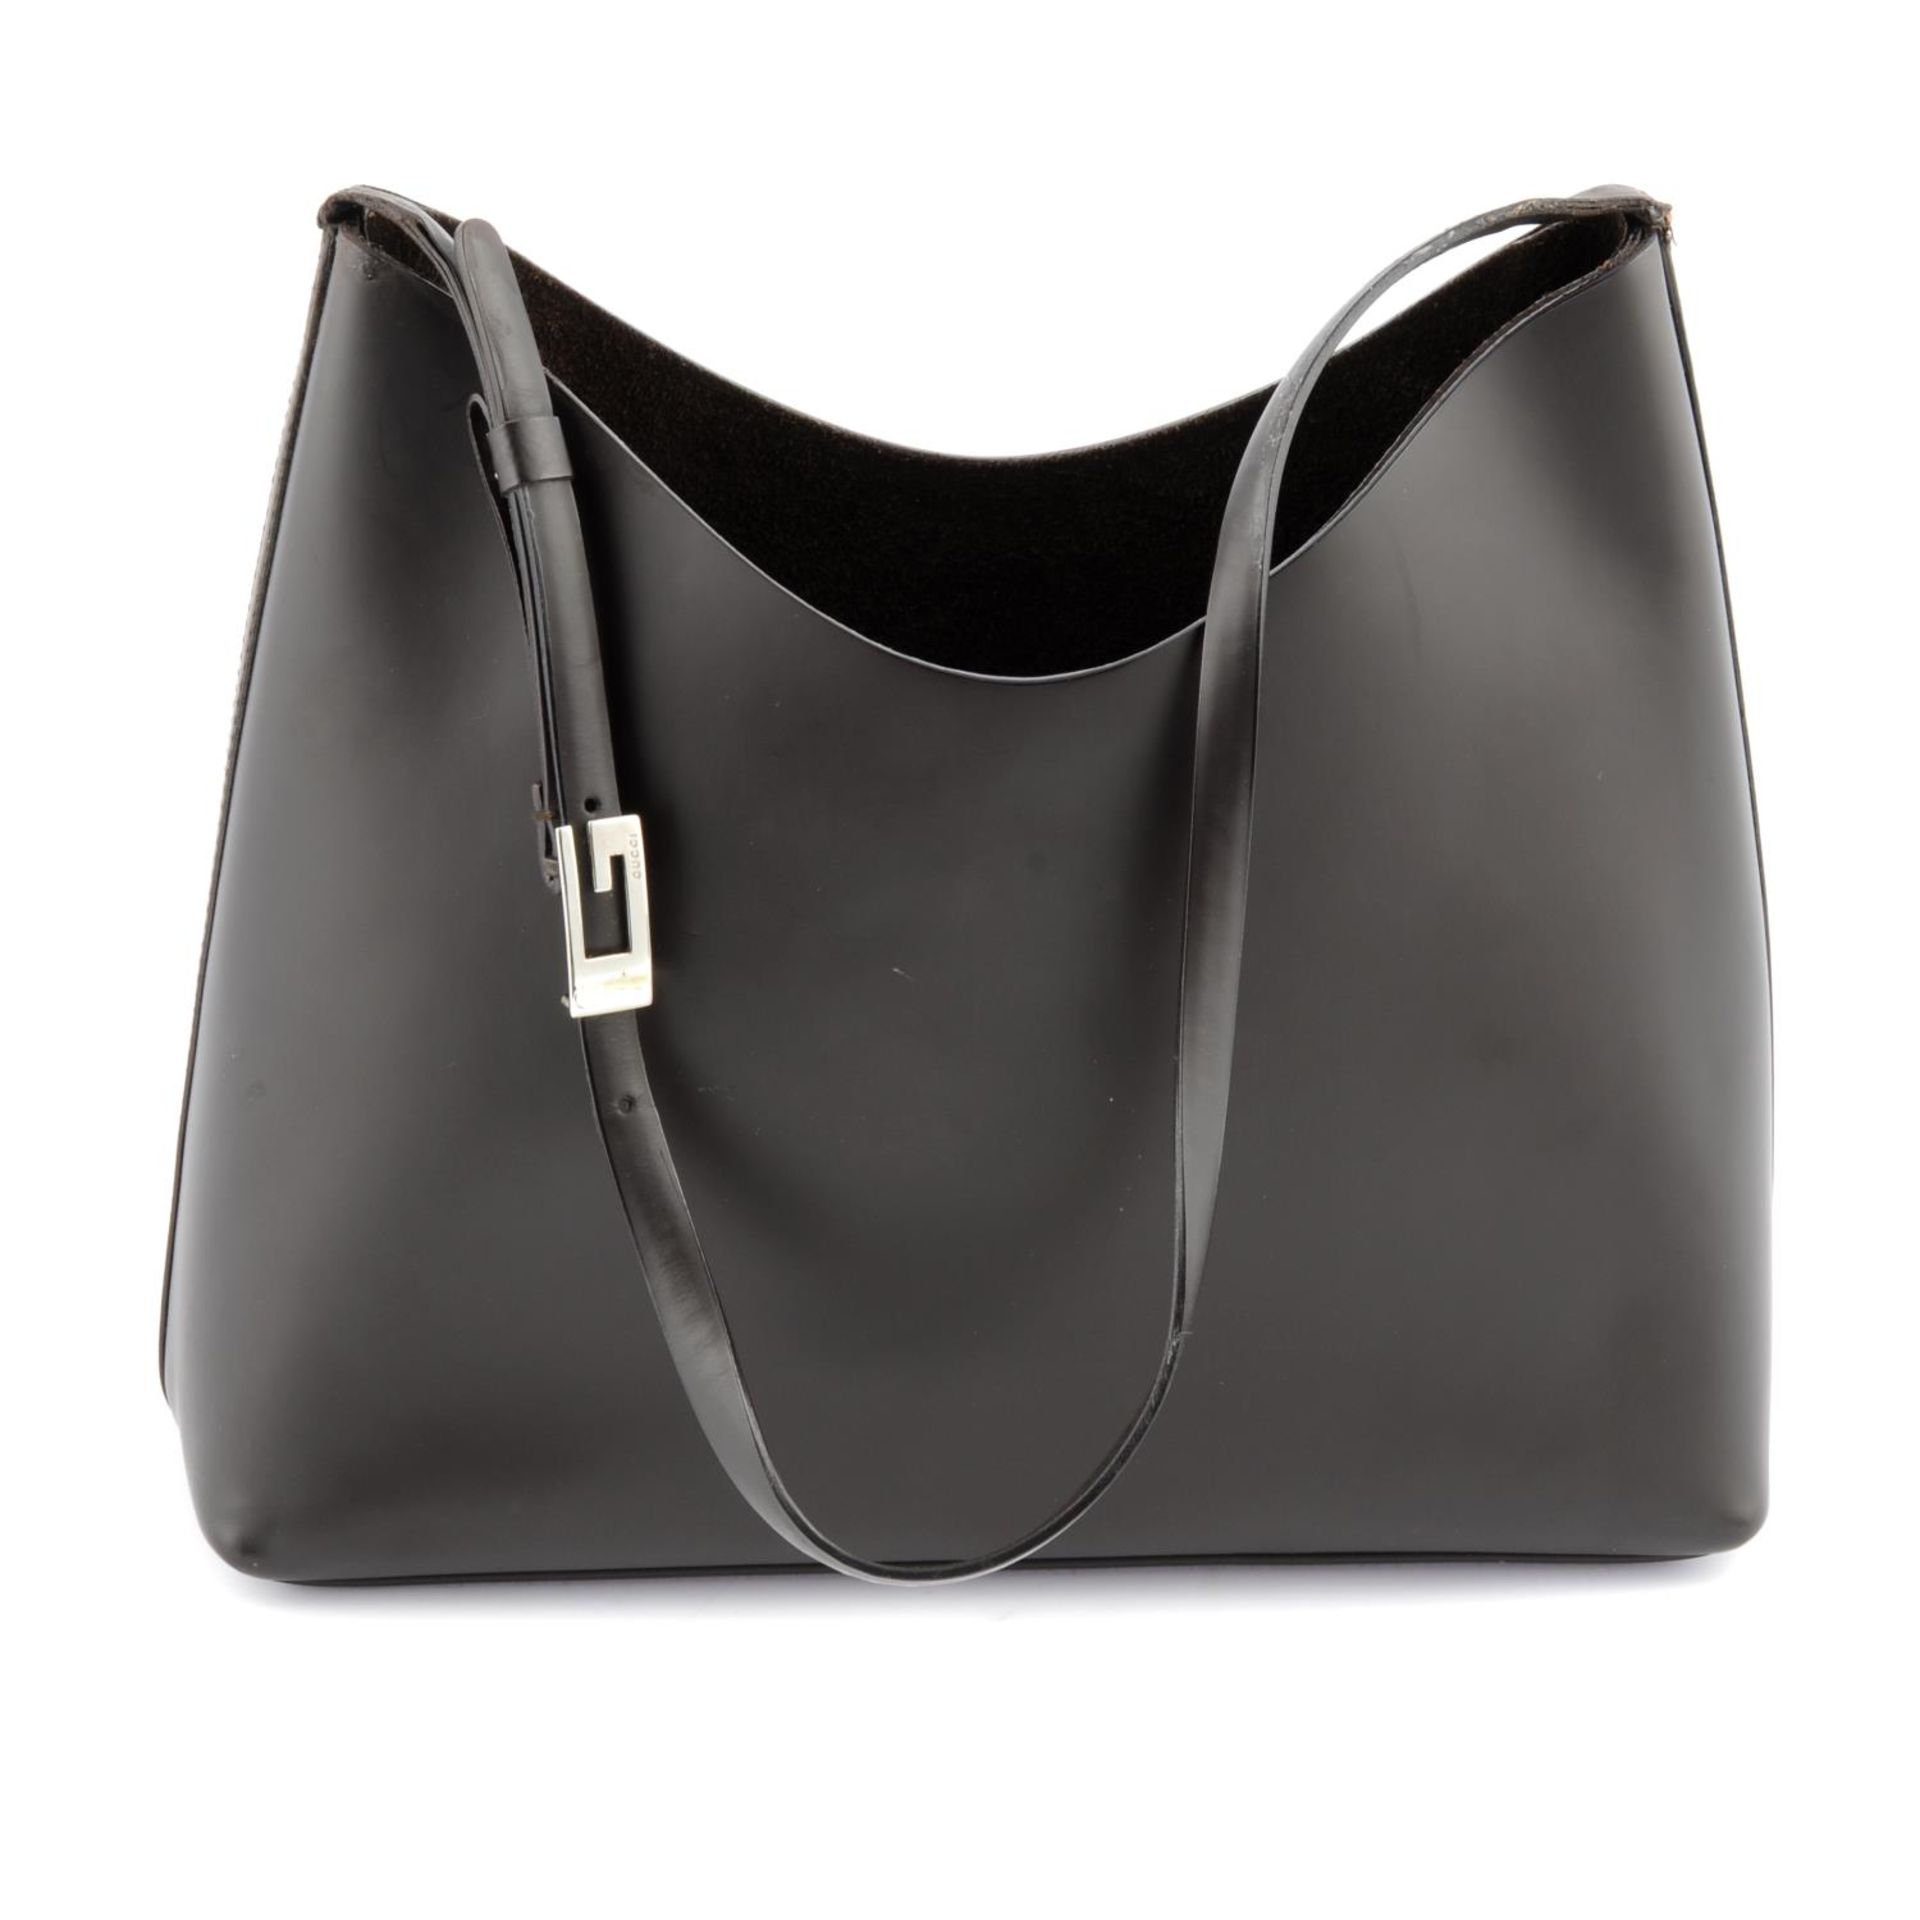 GUCCI - a brown leather handbag. - Image 2 of 5